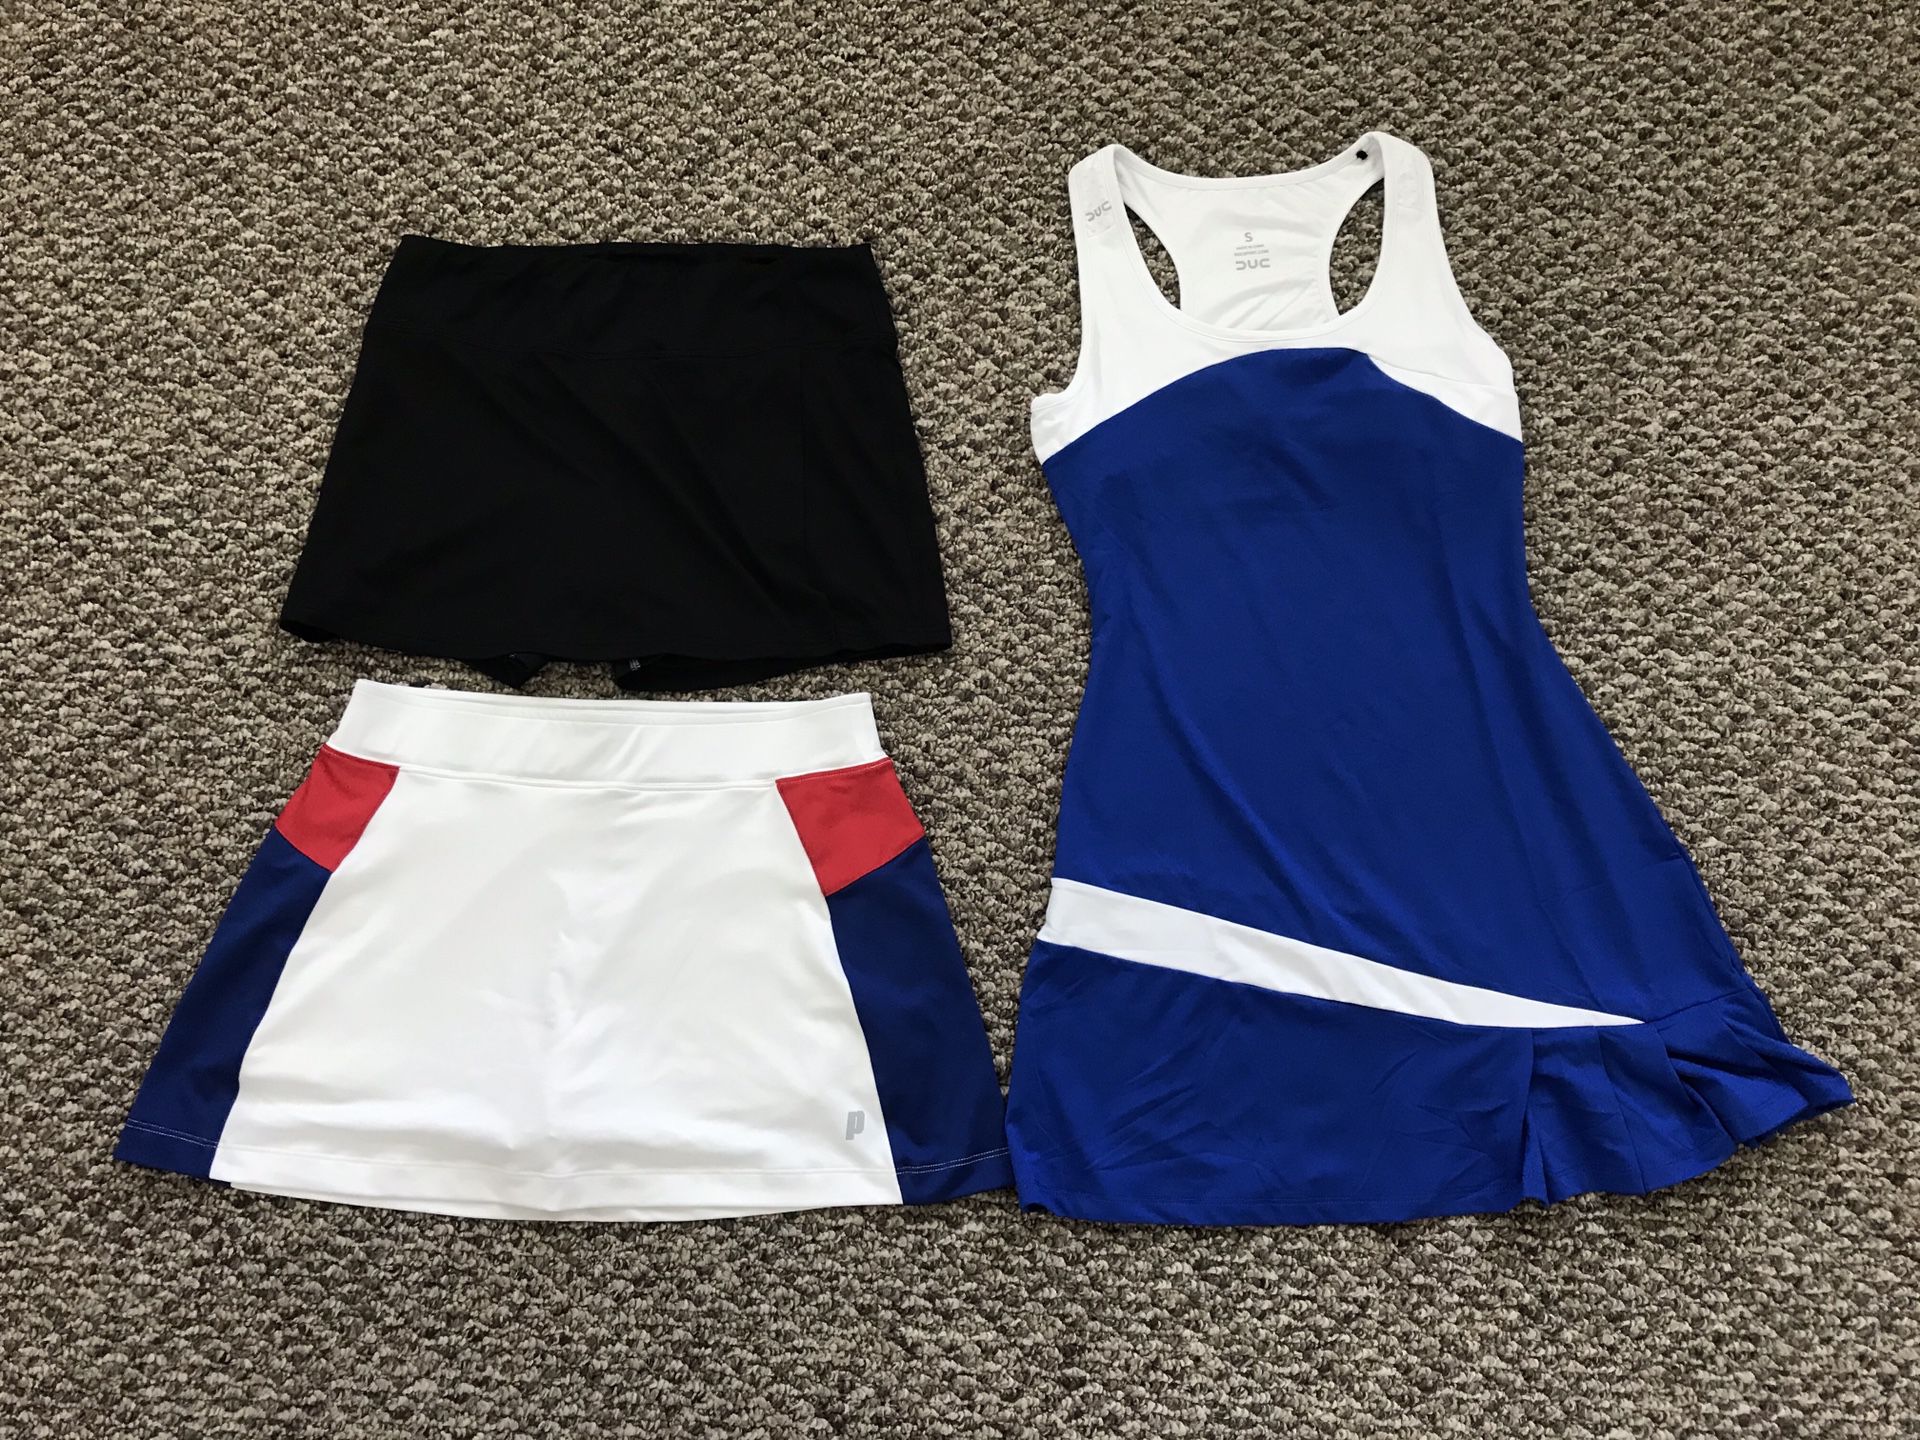 Women’s tennis clothes